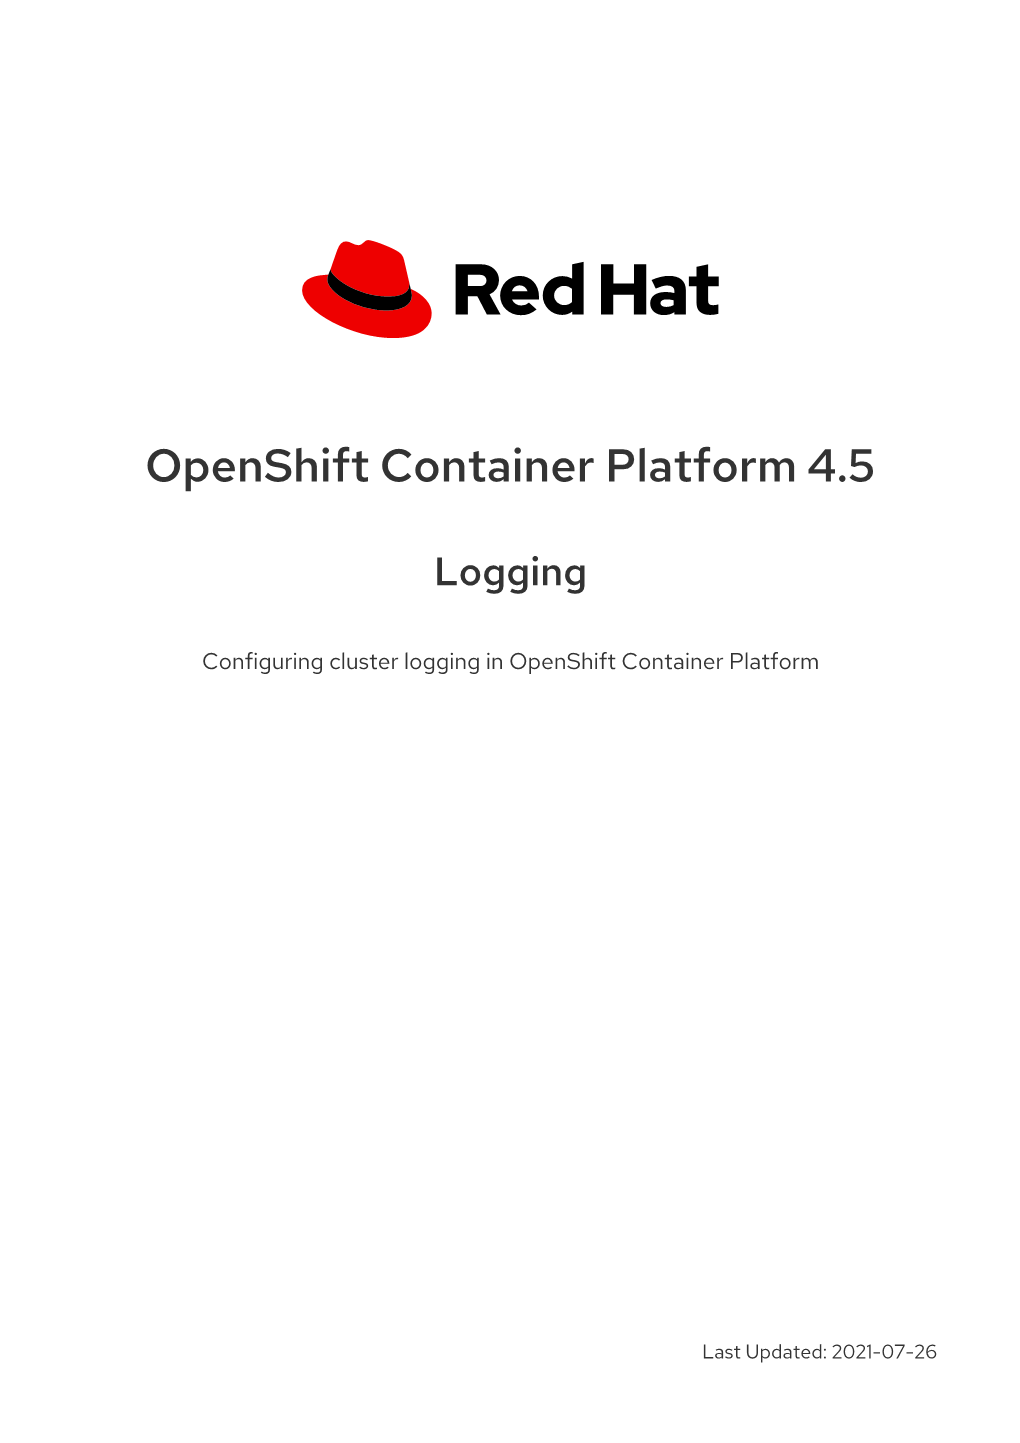 Openshift Container Platform 4.5 Logging